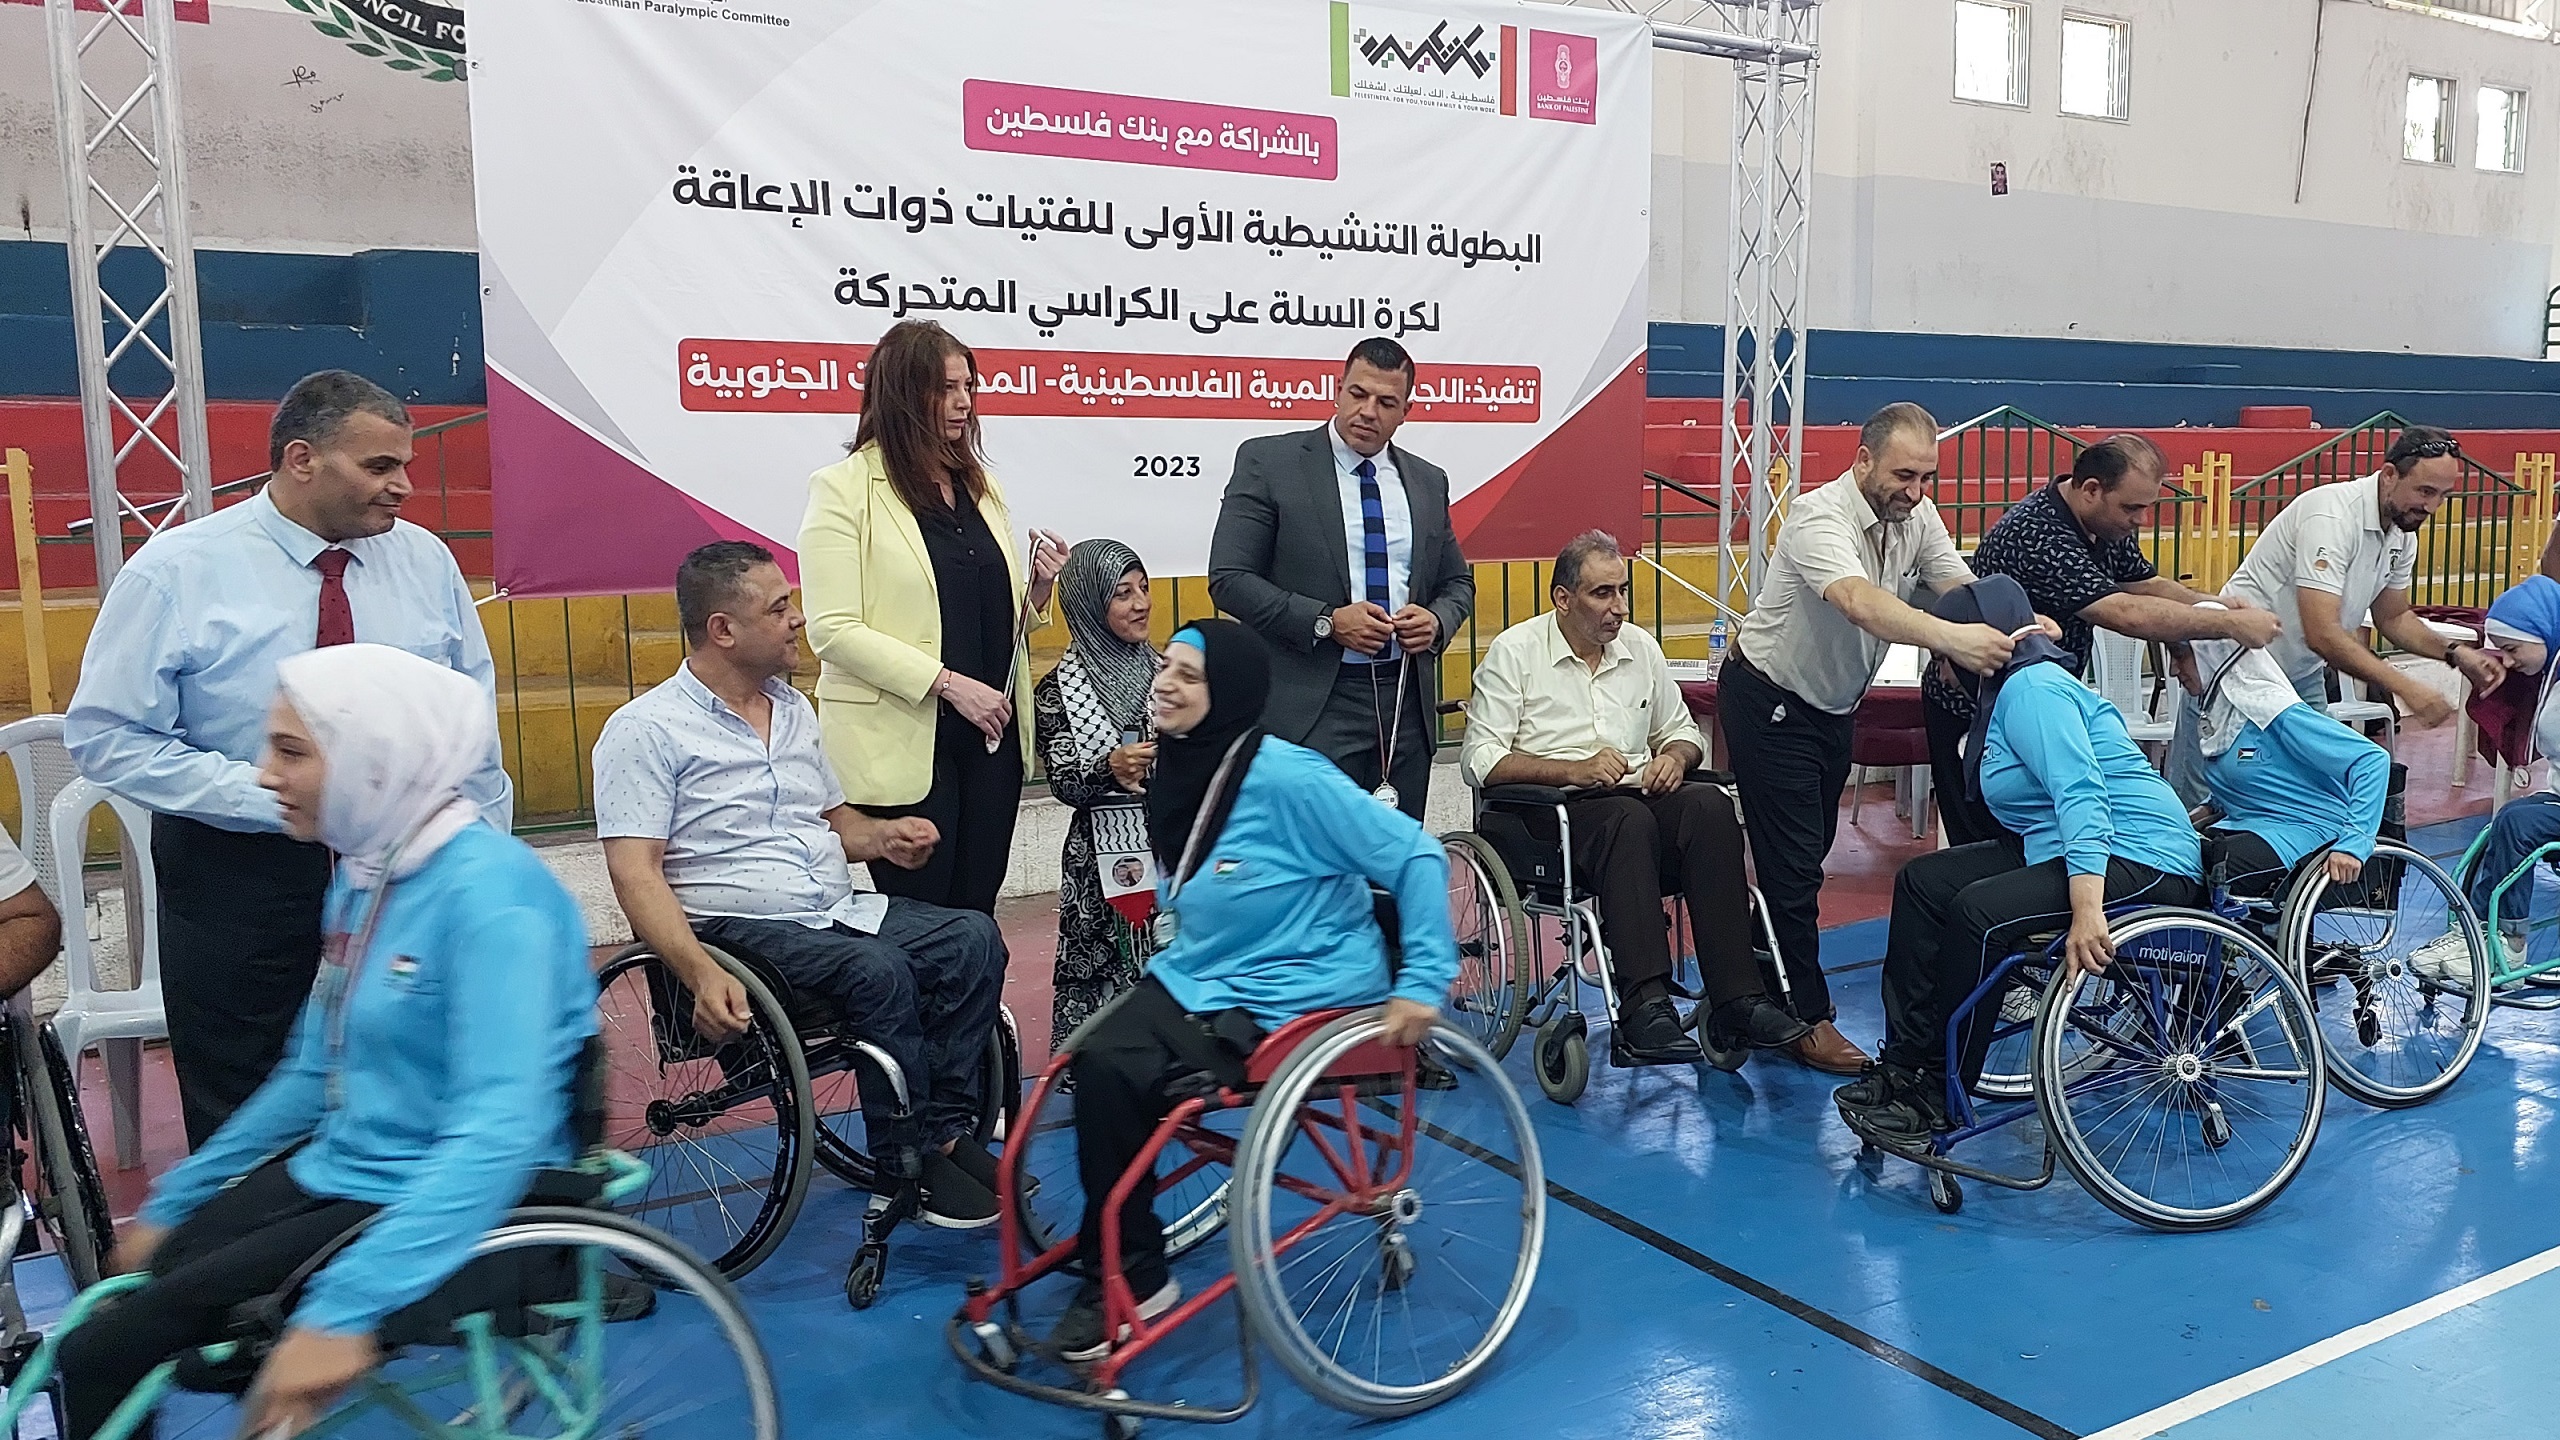 Women’s Wheelchair Basketball Scores High for Female Sports in Gaza